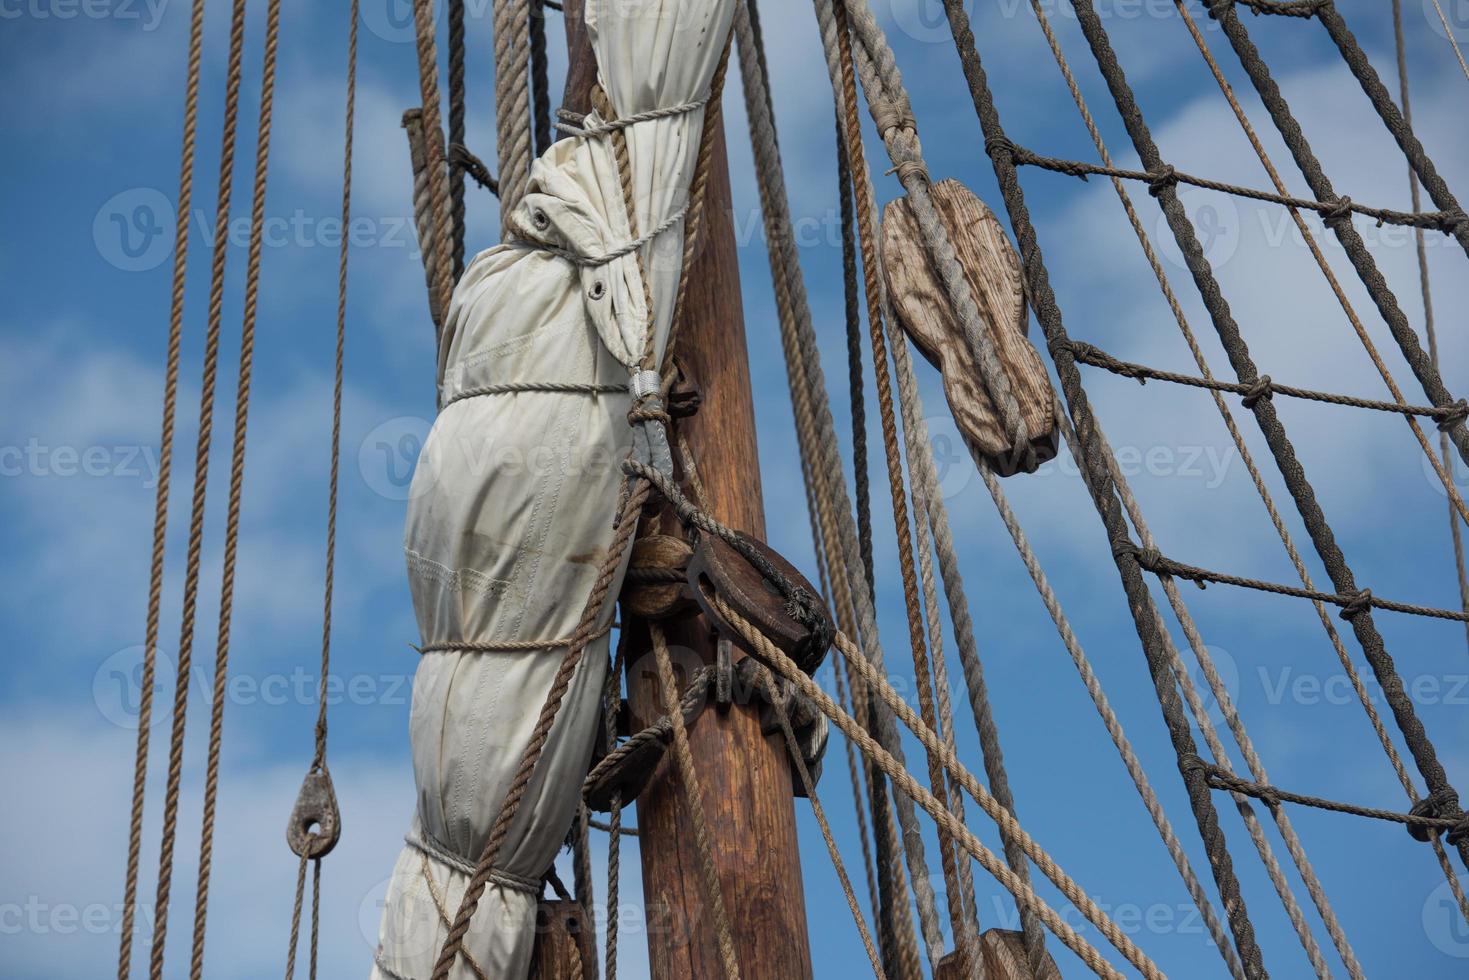 Old vessel sail ship detail photo